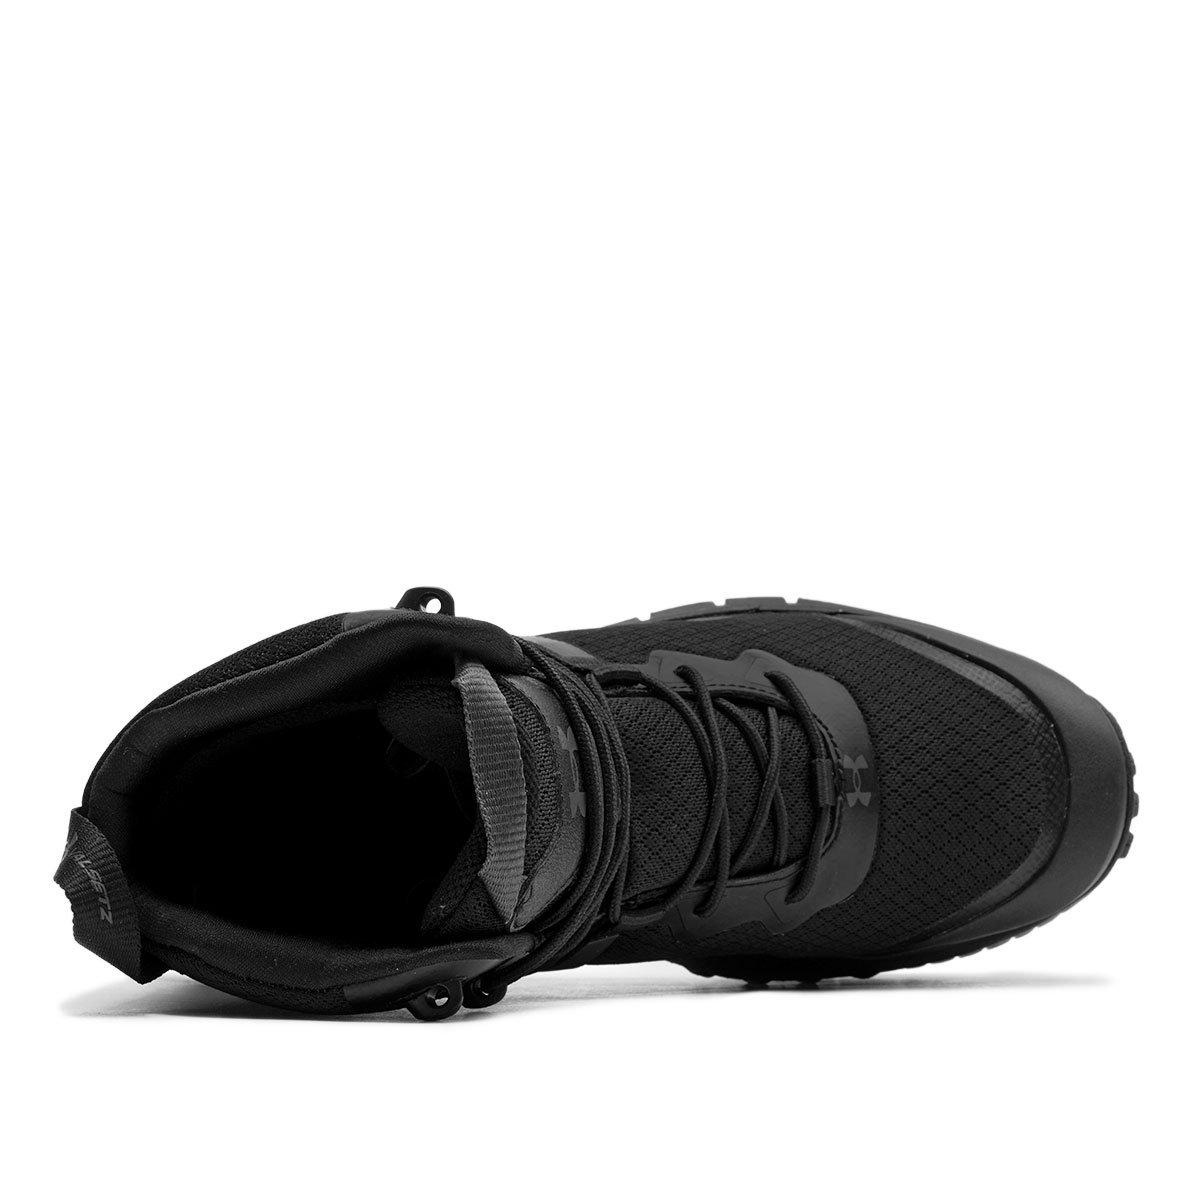 Under Armour UA Micro G Valsetz Мъжки спортни обувки 3023743-001